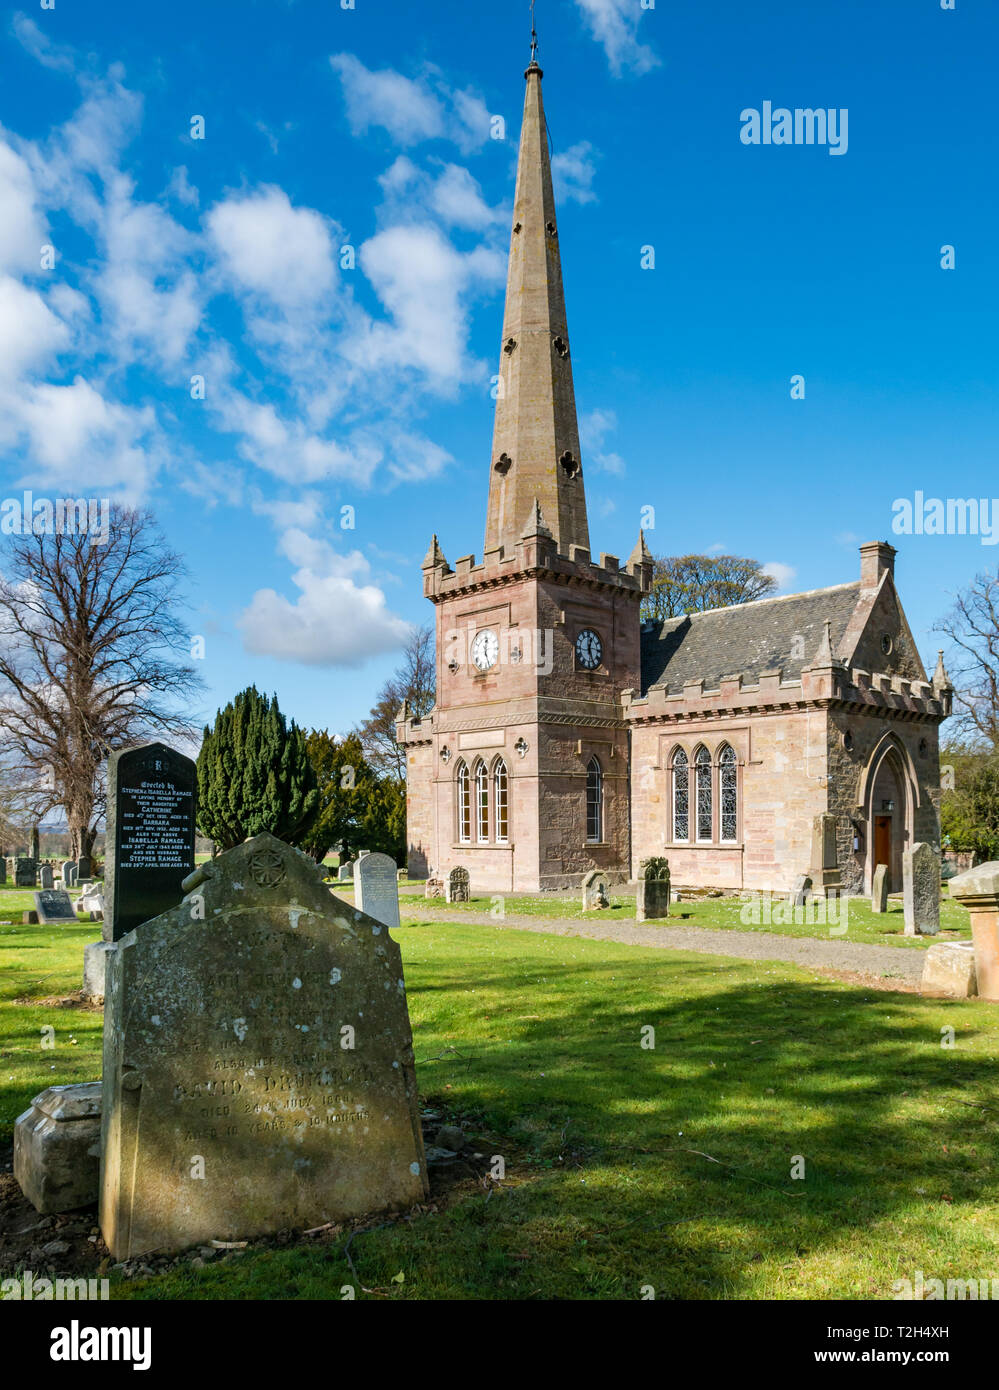 Picturesque conservation village, Saltoun Parish Church with old gravestones in churchyard, East Saltoun, East Lothian, Scotland, UK Stock Photo